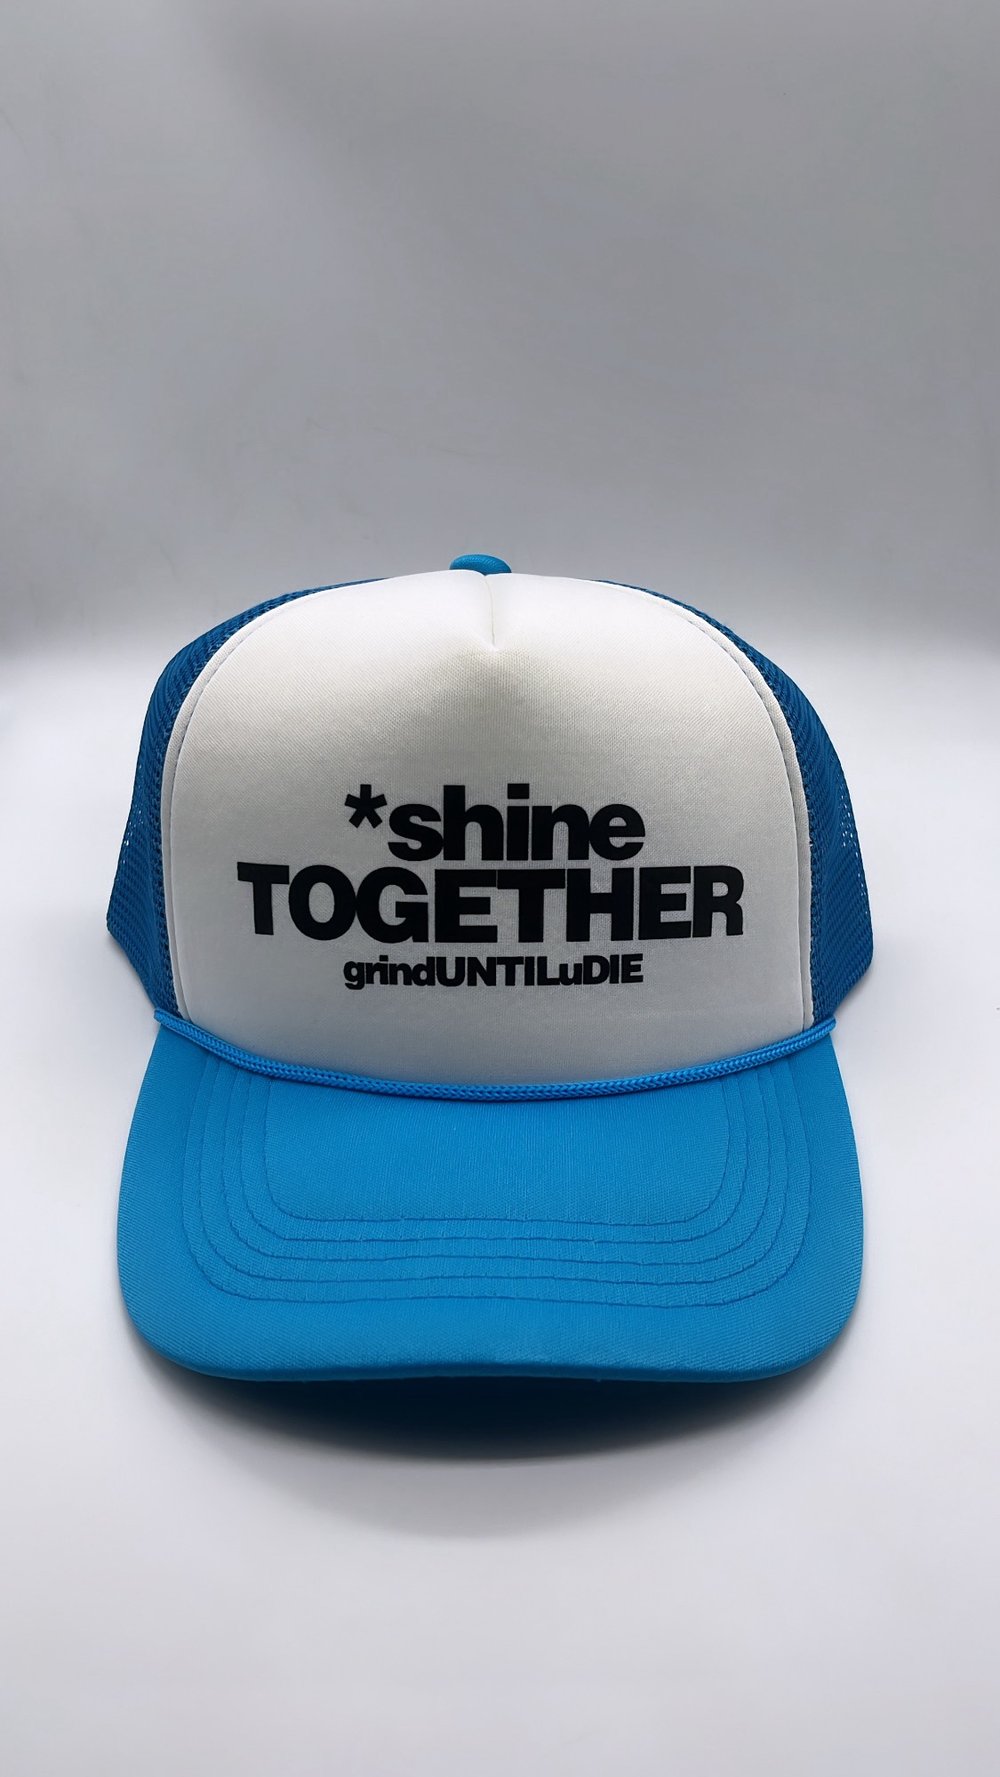 GUUD "shine TOGETHER" Trucker Hat